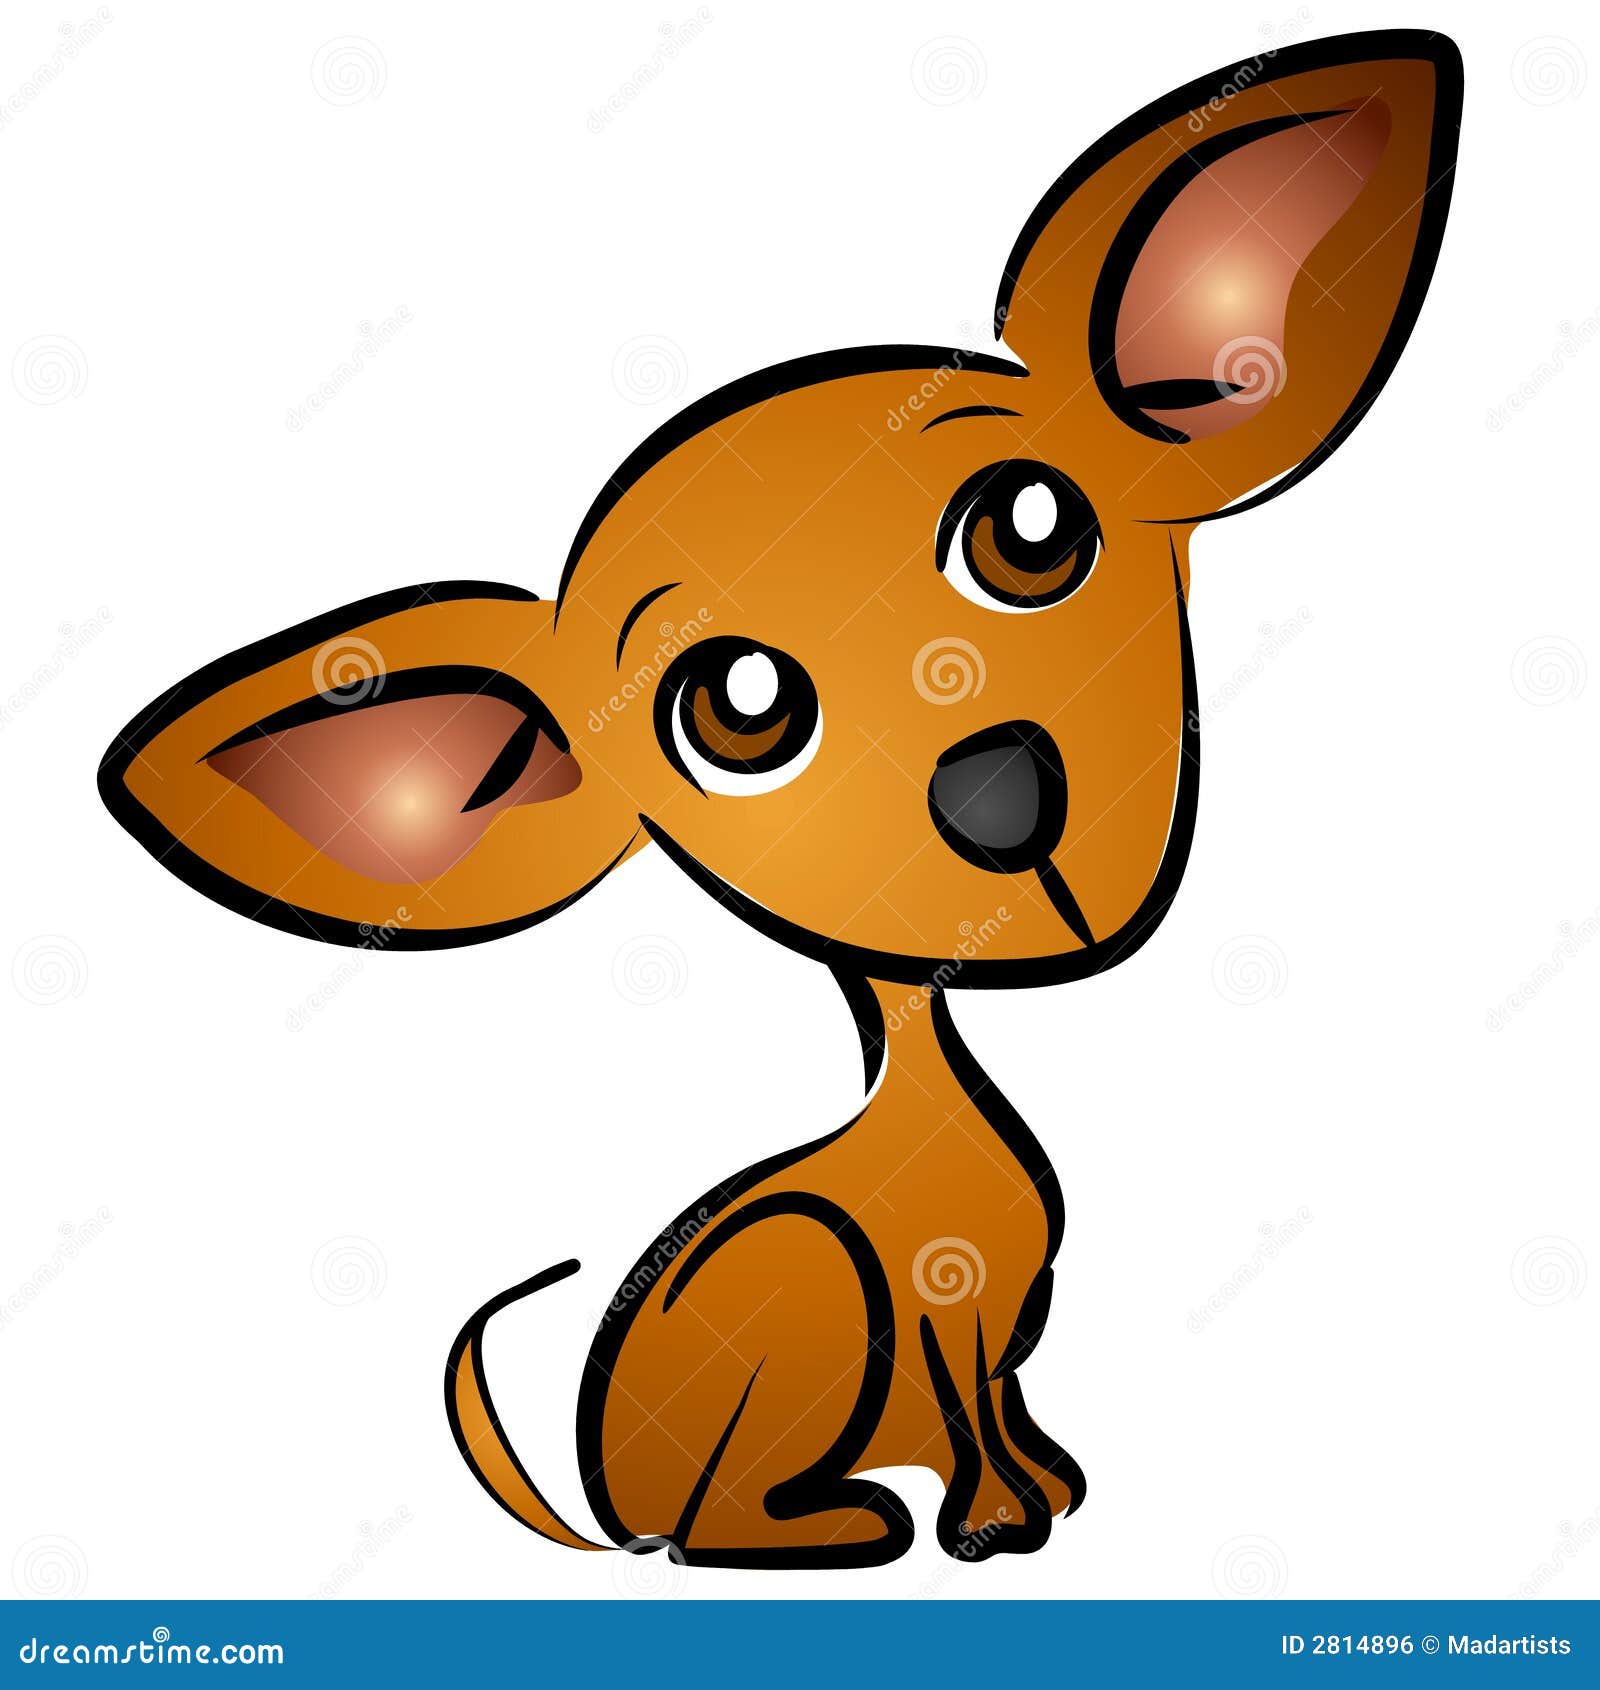 free cartoon dog clip art images - photo #48